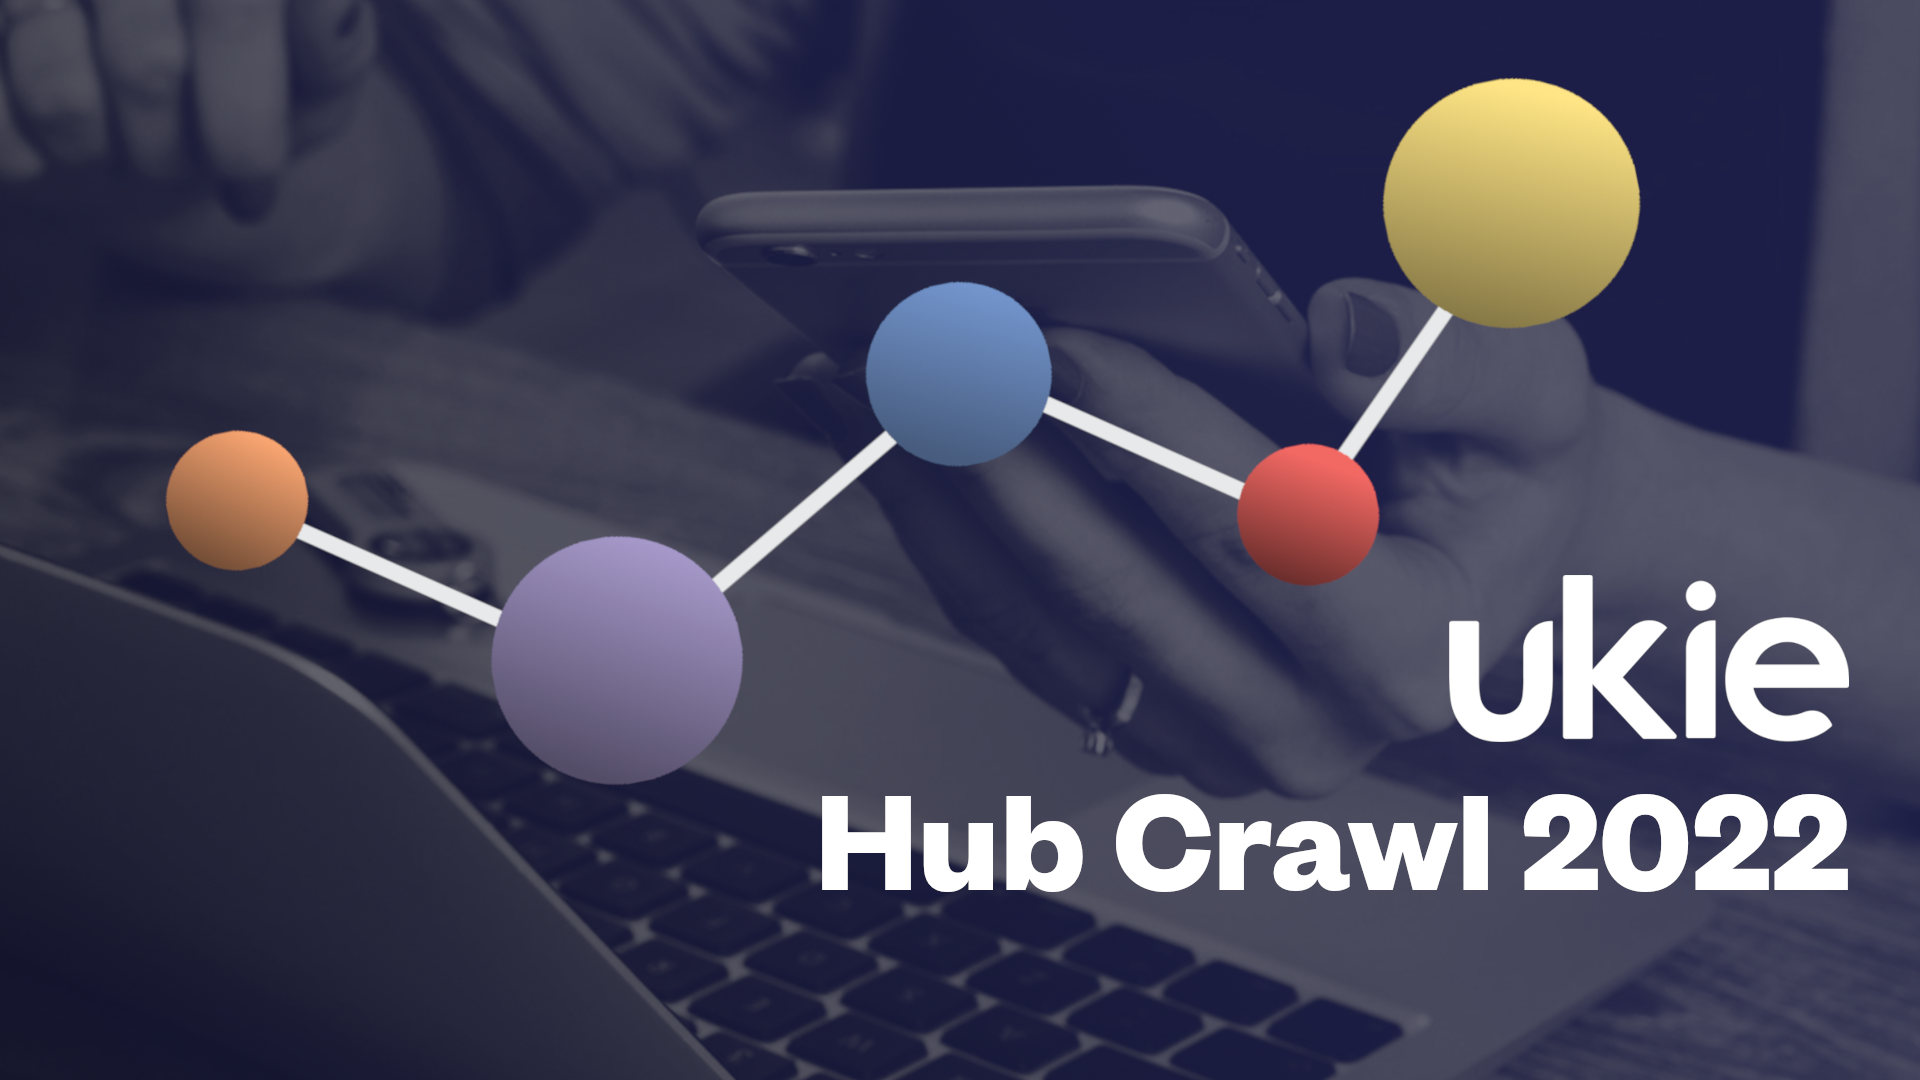 Promotional artwork for the UKIE Hub Crawl 2022